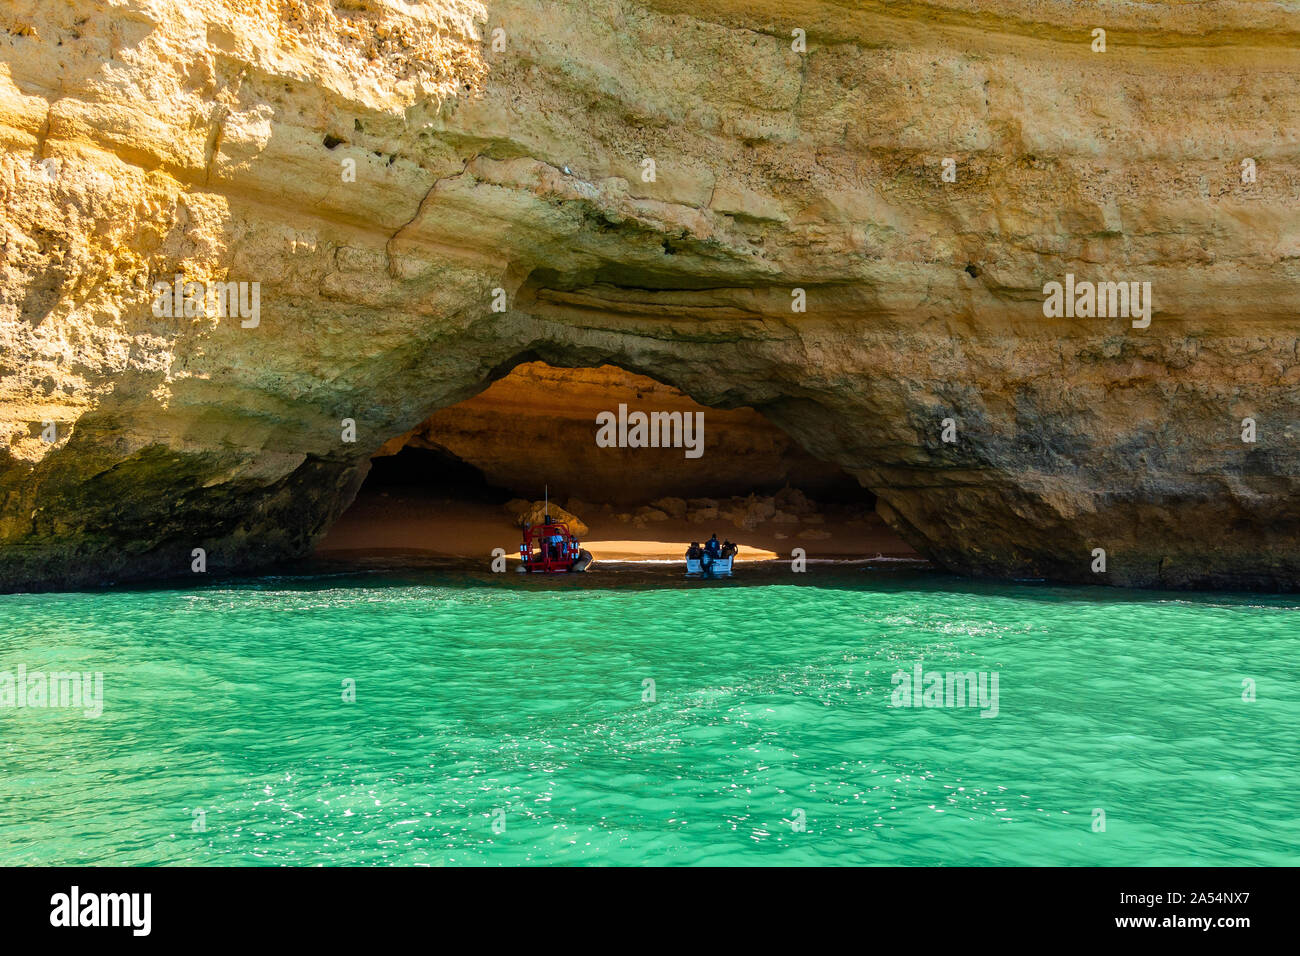 Entering the Algar de Benagil (Benagil cave), the most famous tourist attraction in Algarve, Portugal Stock Photo